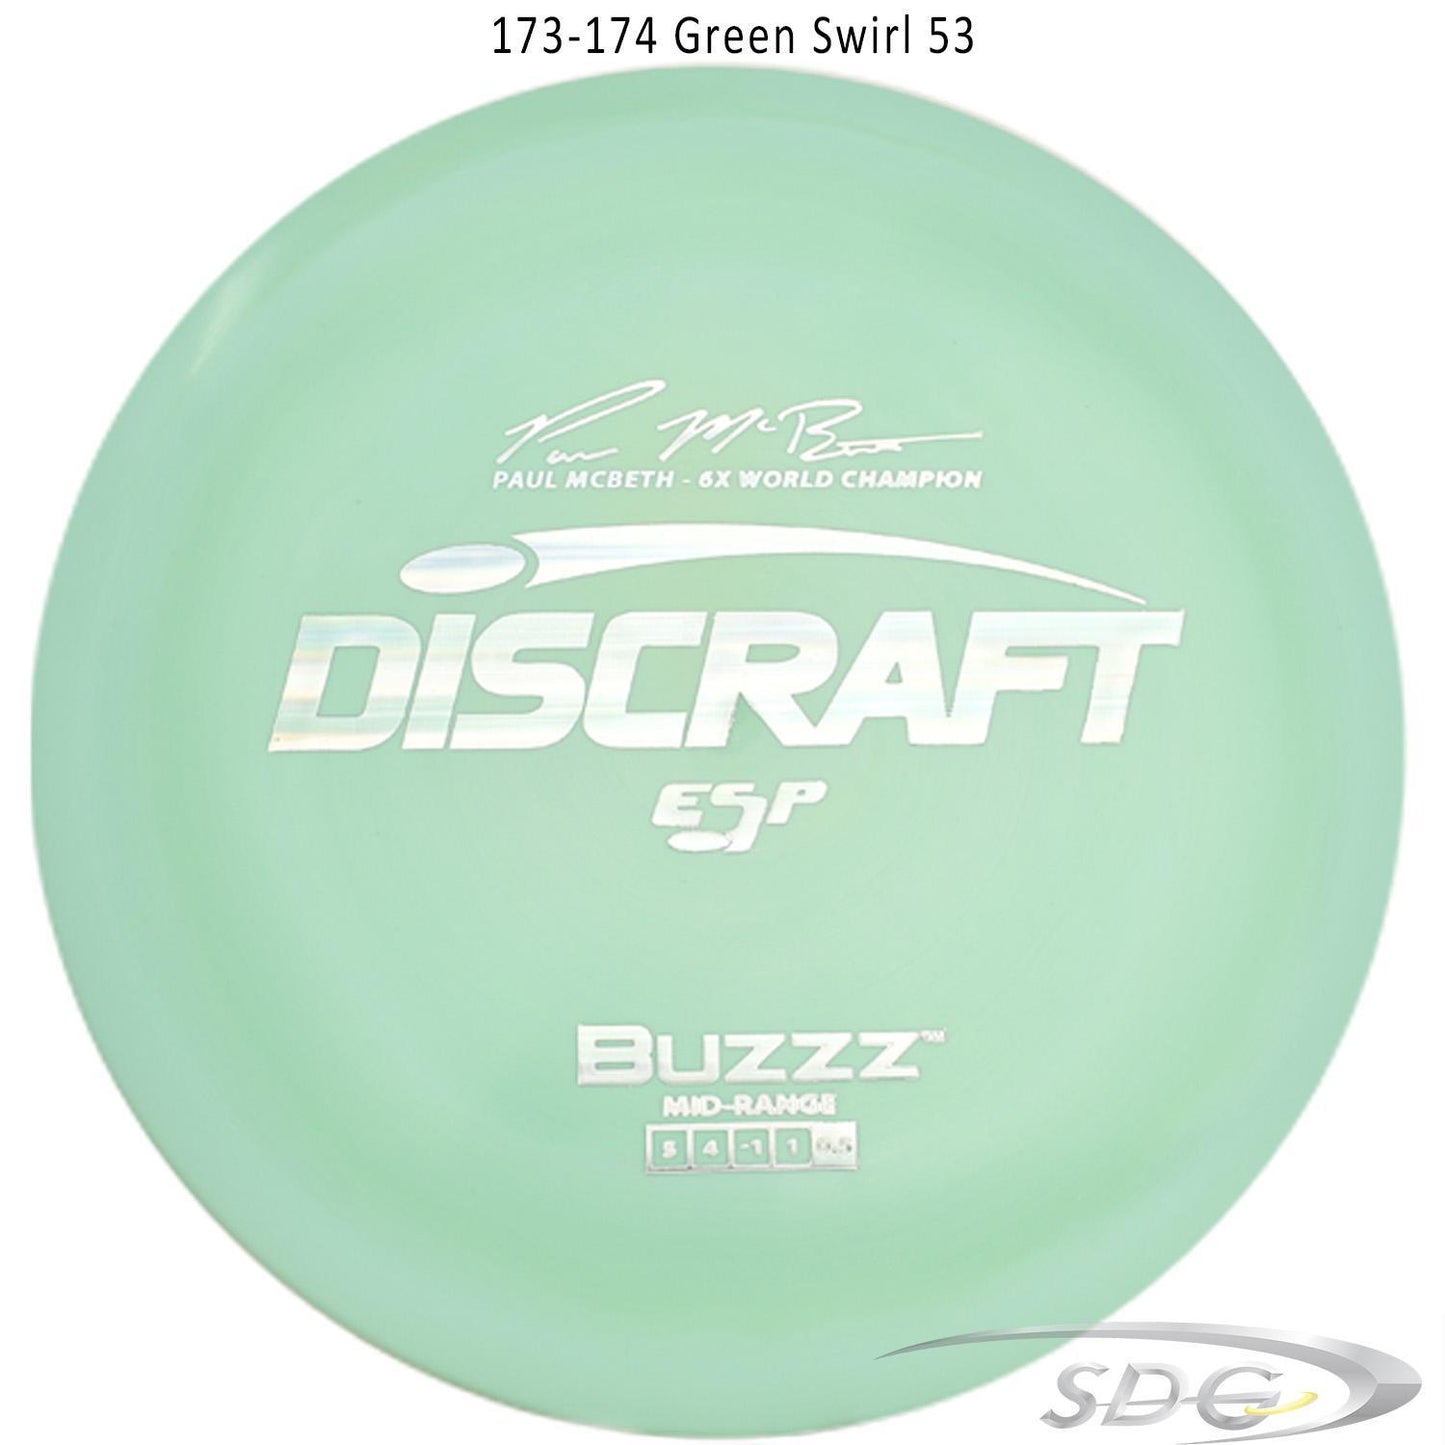 discraft-esp-buzzz-6x-paul-mcbeth-signature-series-disc-golf-mid-range 173-174 Green Swirl 53